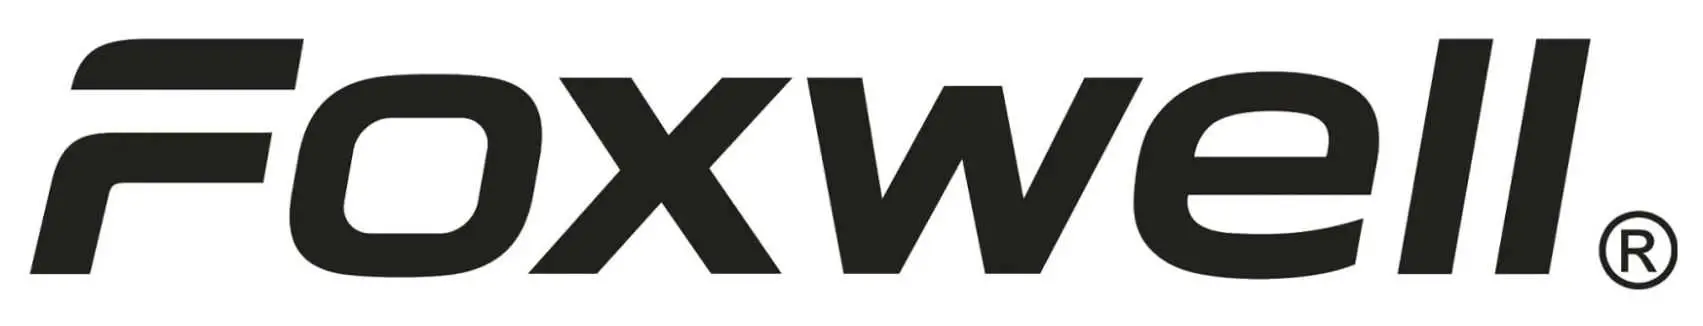 Foxwell-logo